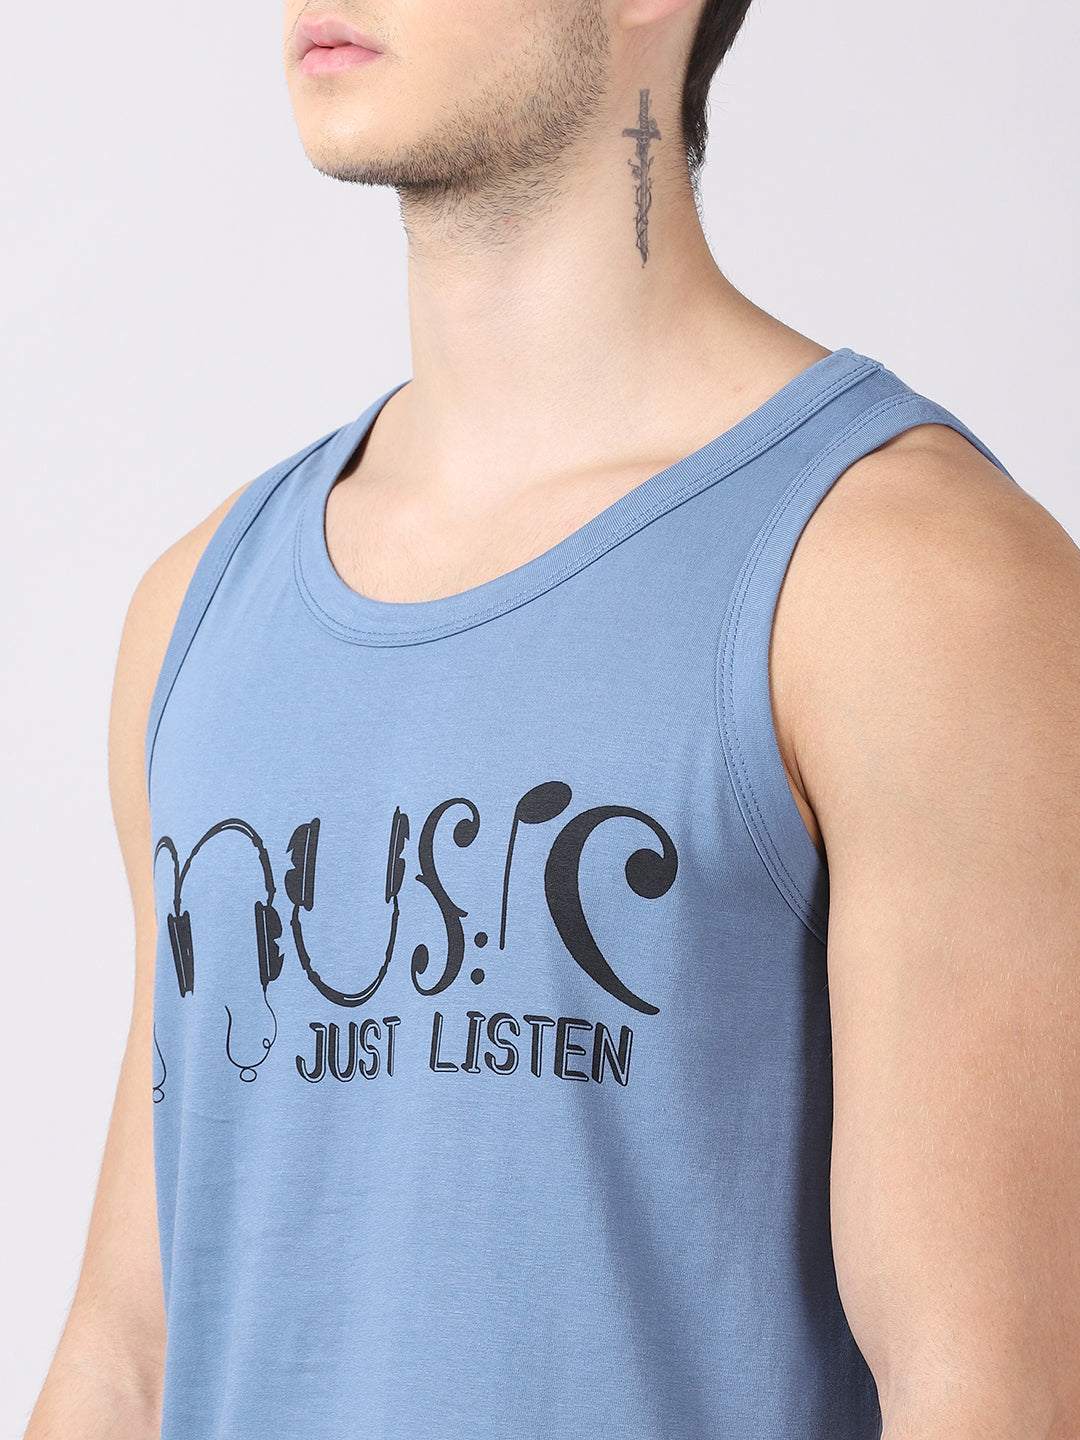 Music Sleeveless T-Shirt Vest Bushirt   